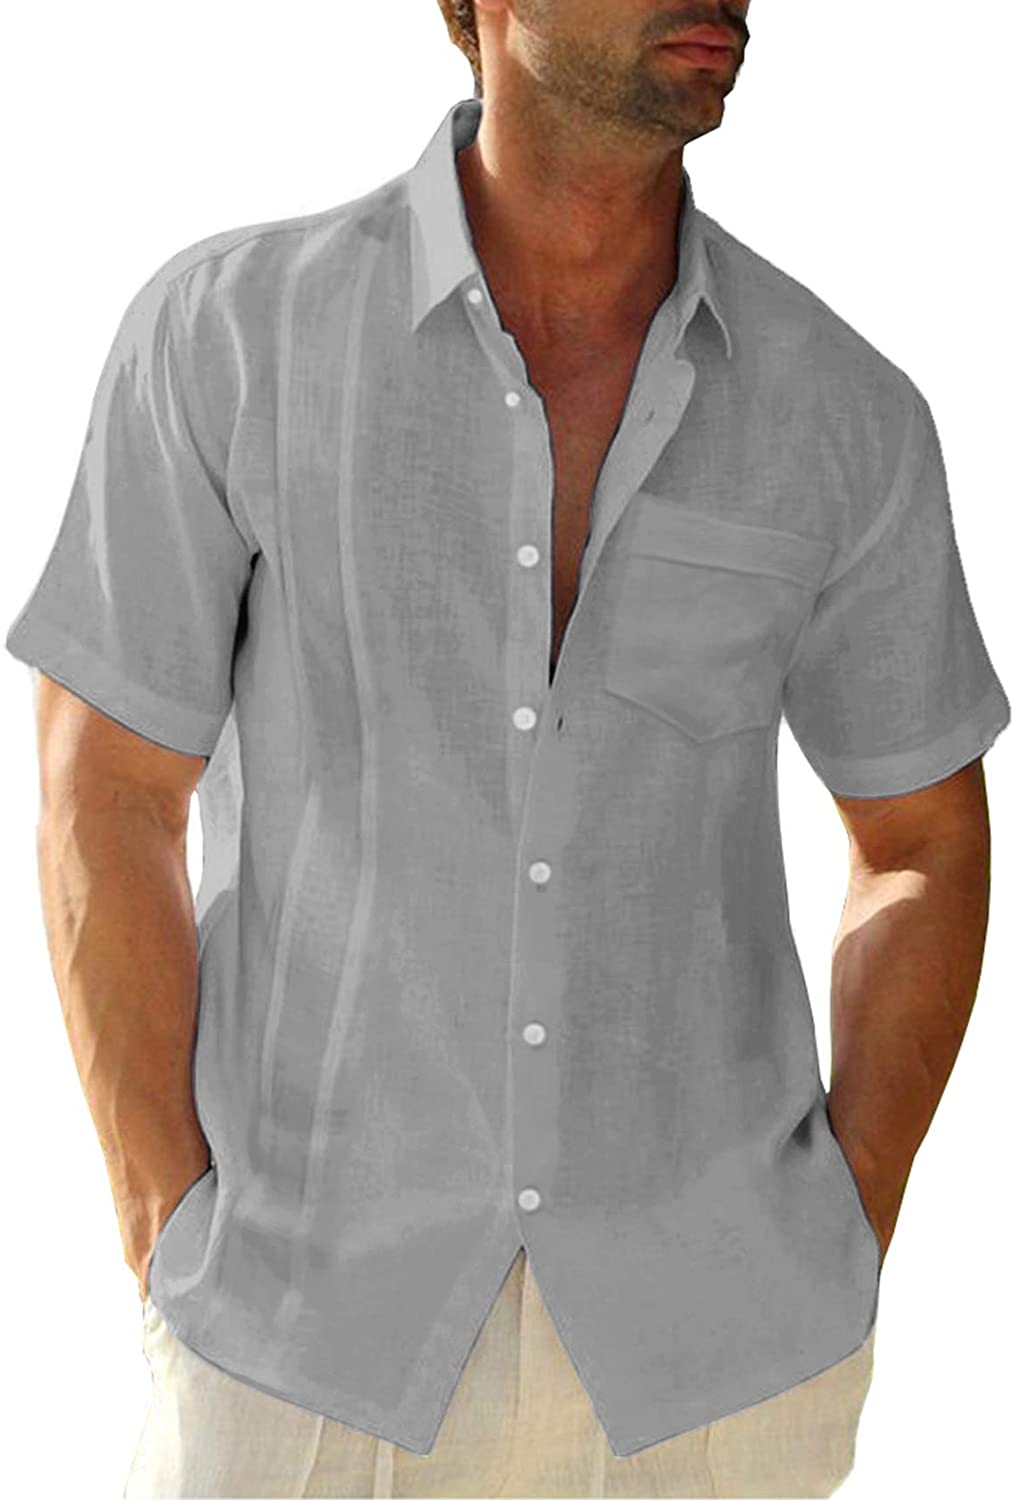 Pengfei Mens Short Sleeve Shirts Linen Cotton Button Down Tees Spread Collar Plain Shirts 